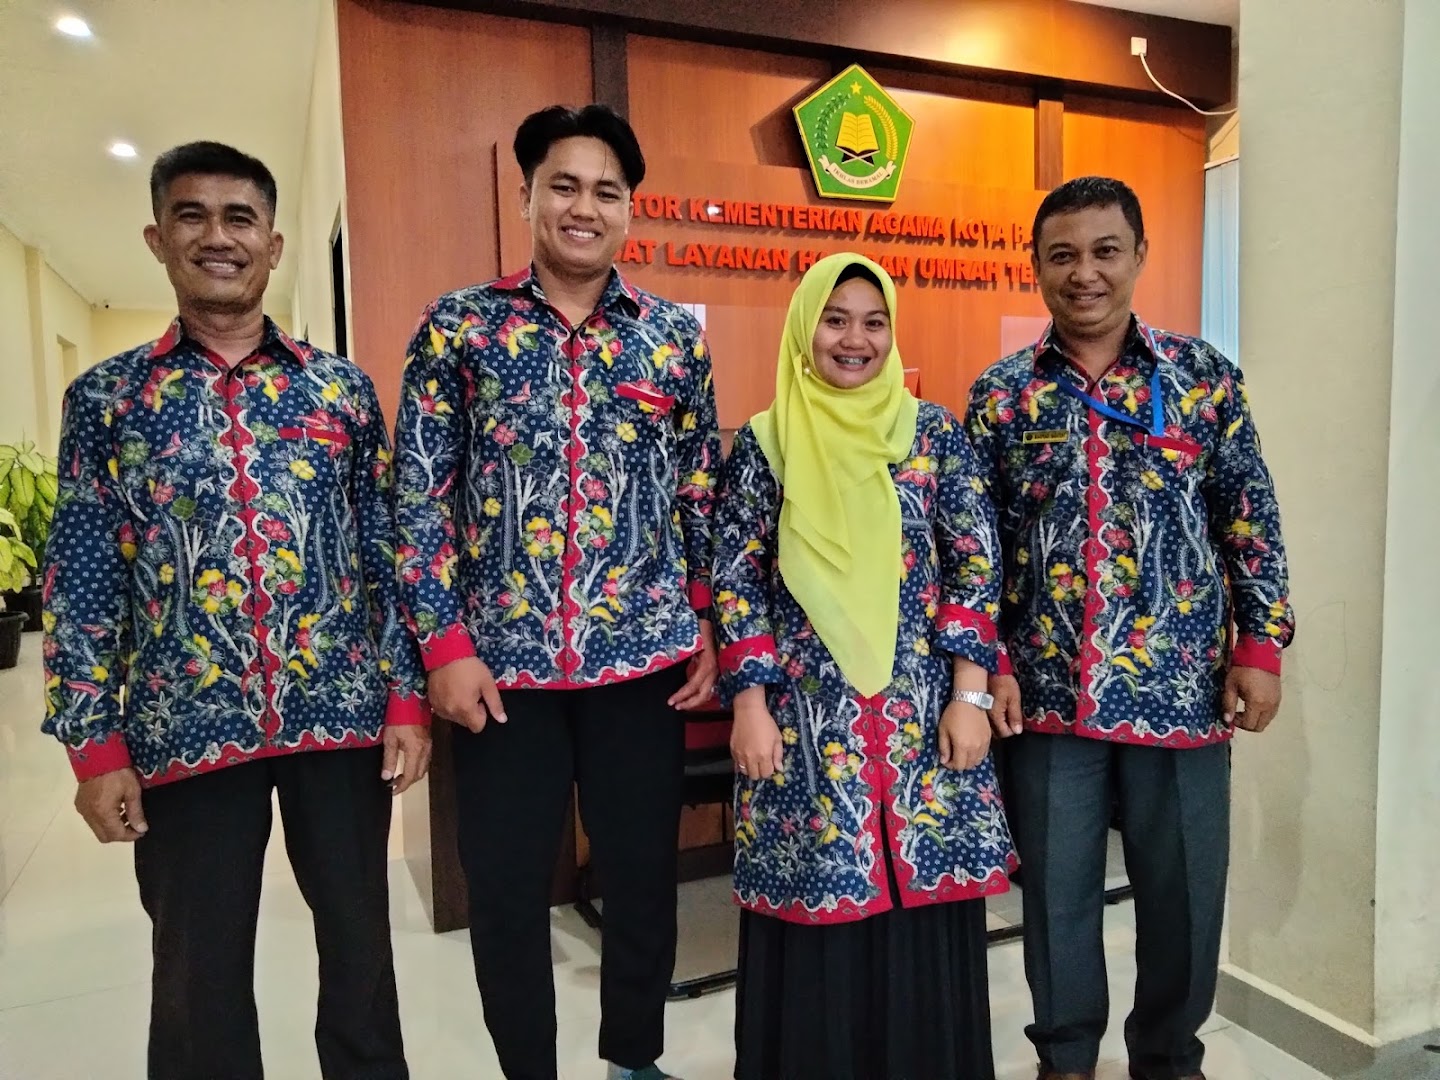 Pusat Pelayanan Haji Dan Umrah Terpadu Kantor Kementerian Agama Kota Padang Photo